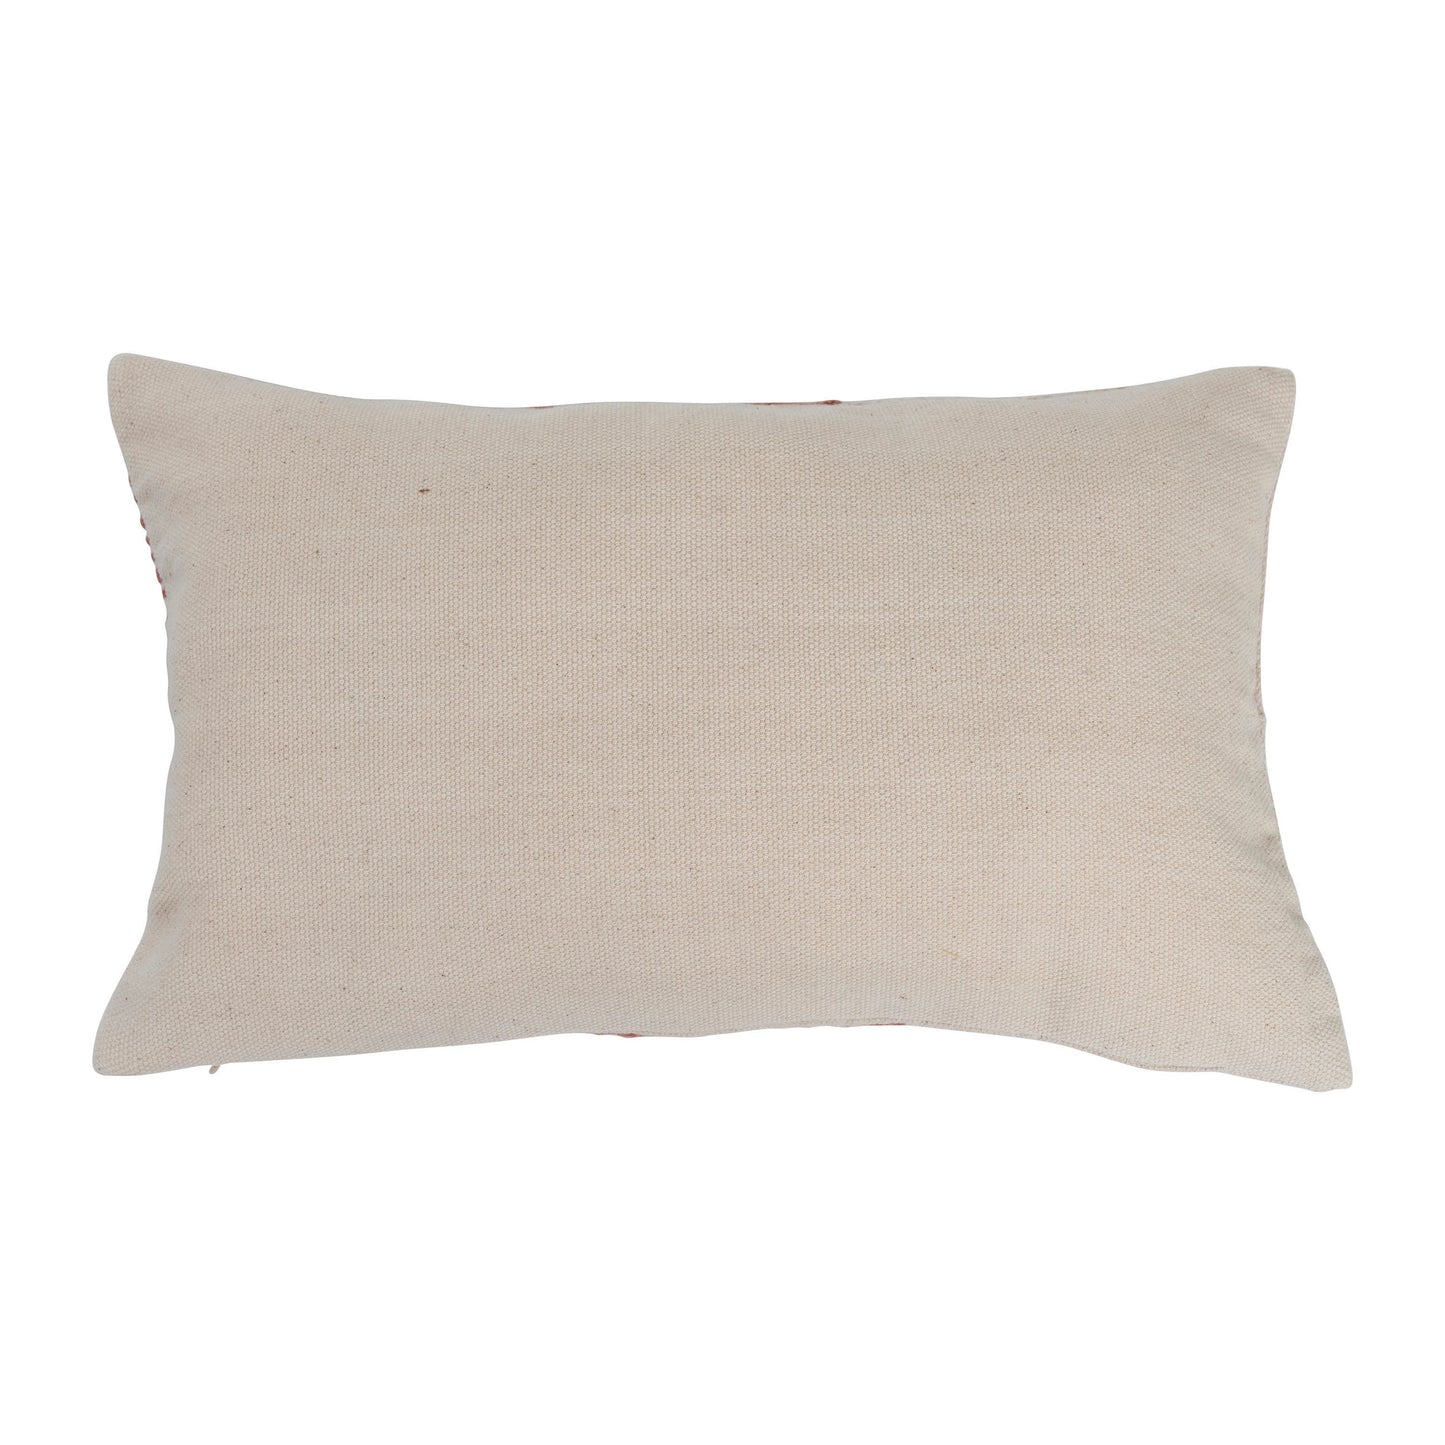 20" x 12" Cotton Embroidered Lumbar Pillow